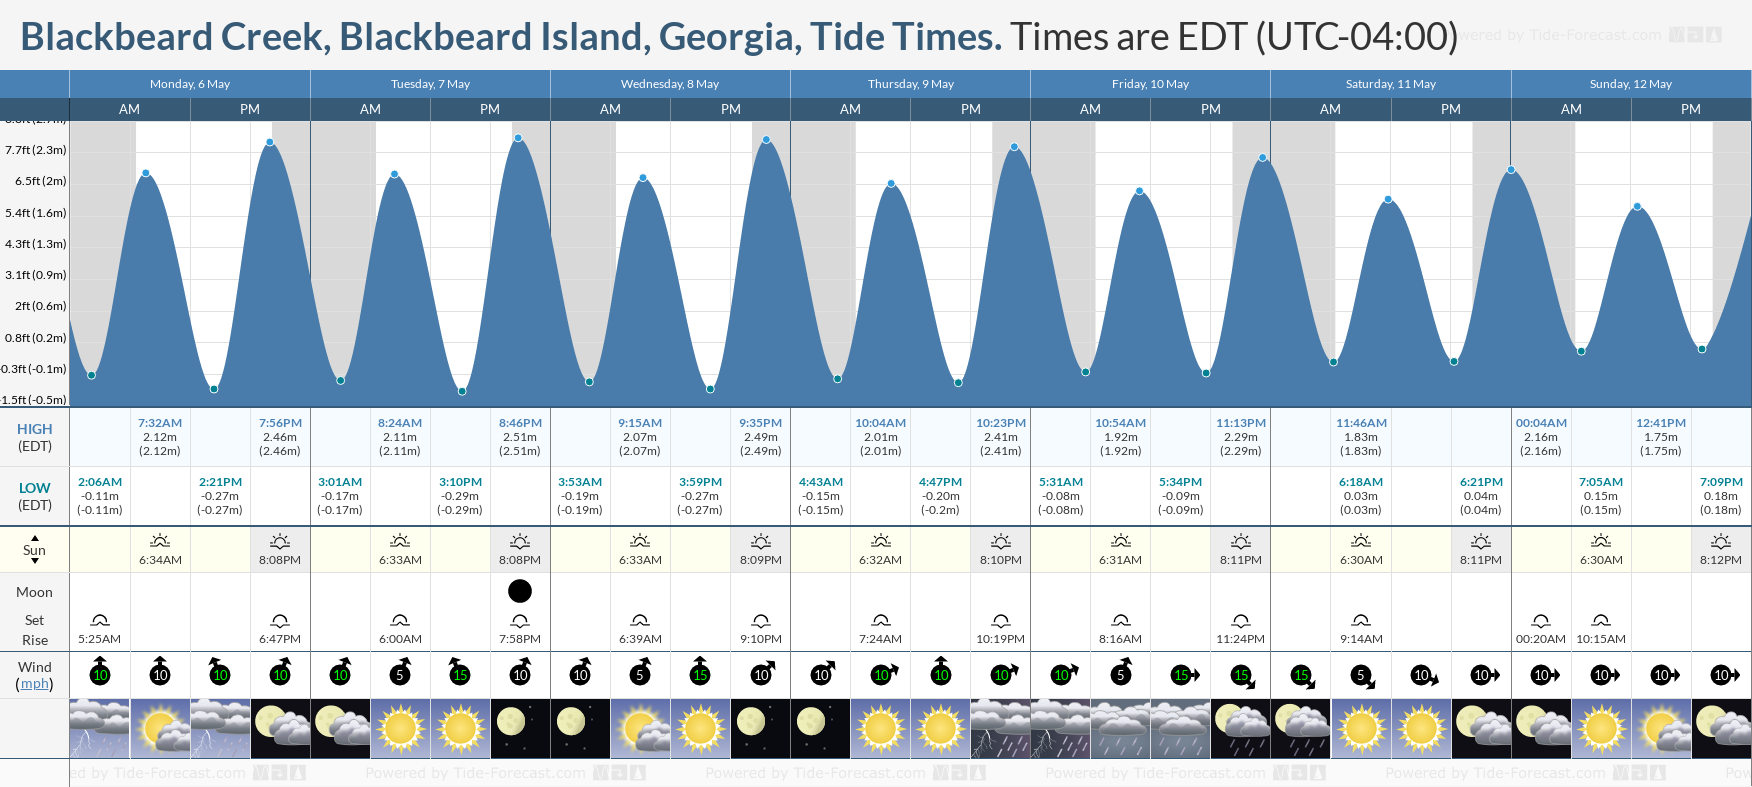 Blackbeard Creek, Blackbeard Island, Georgia Tide Chart including high and low tide tide times for the next 7 days